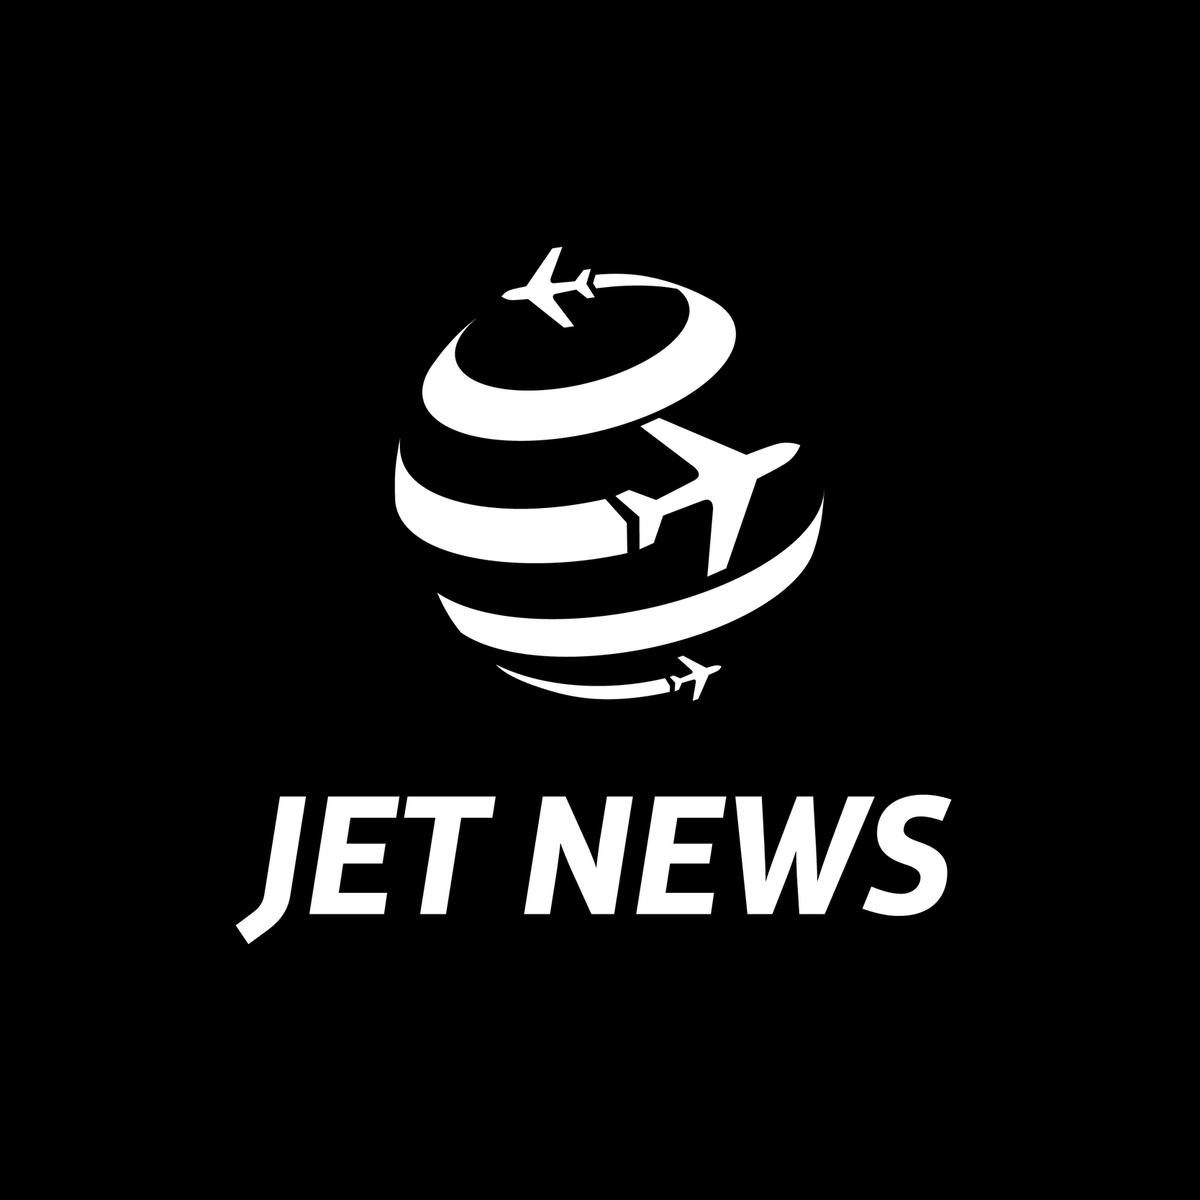 jetnews's images